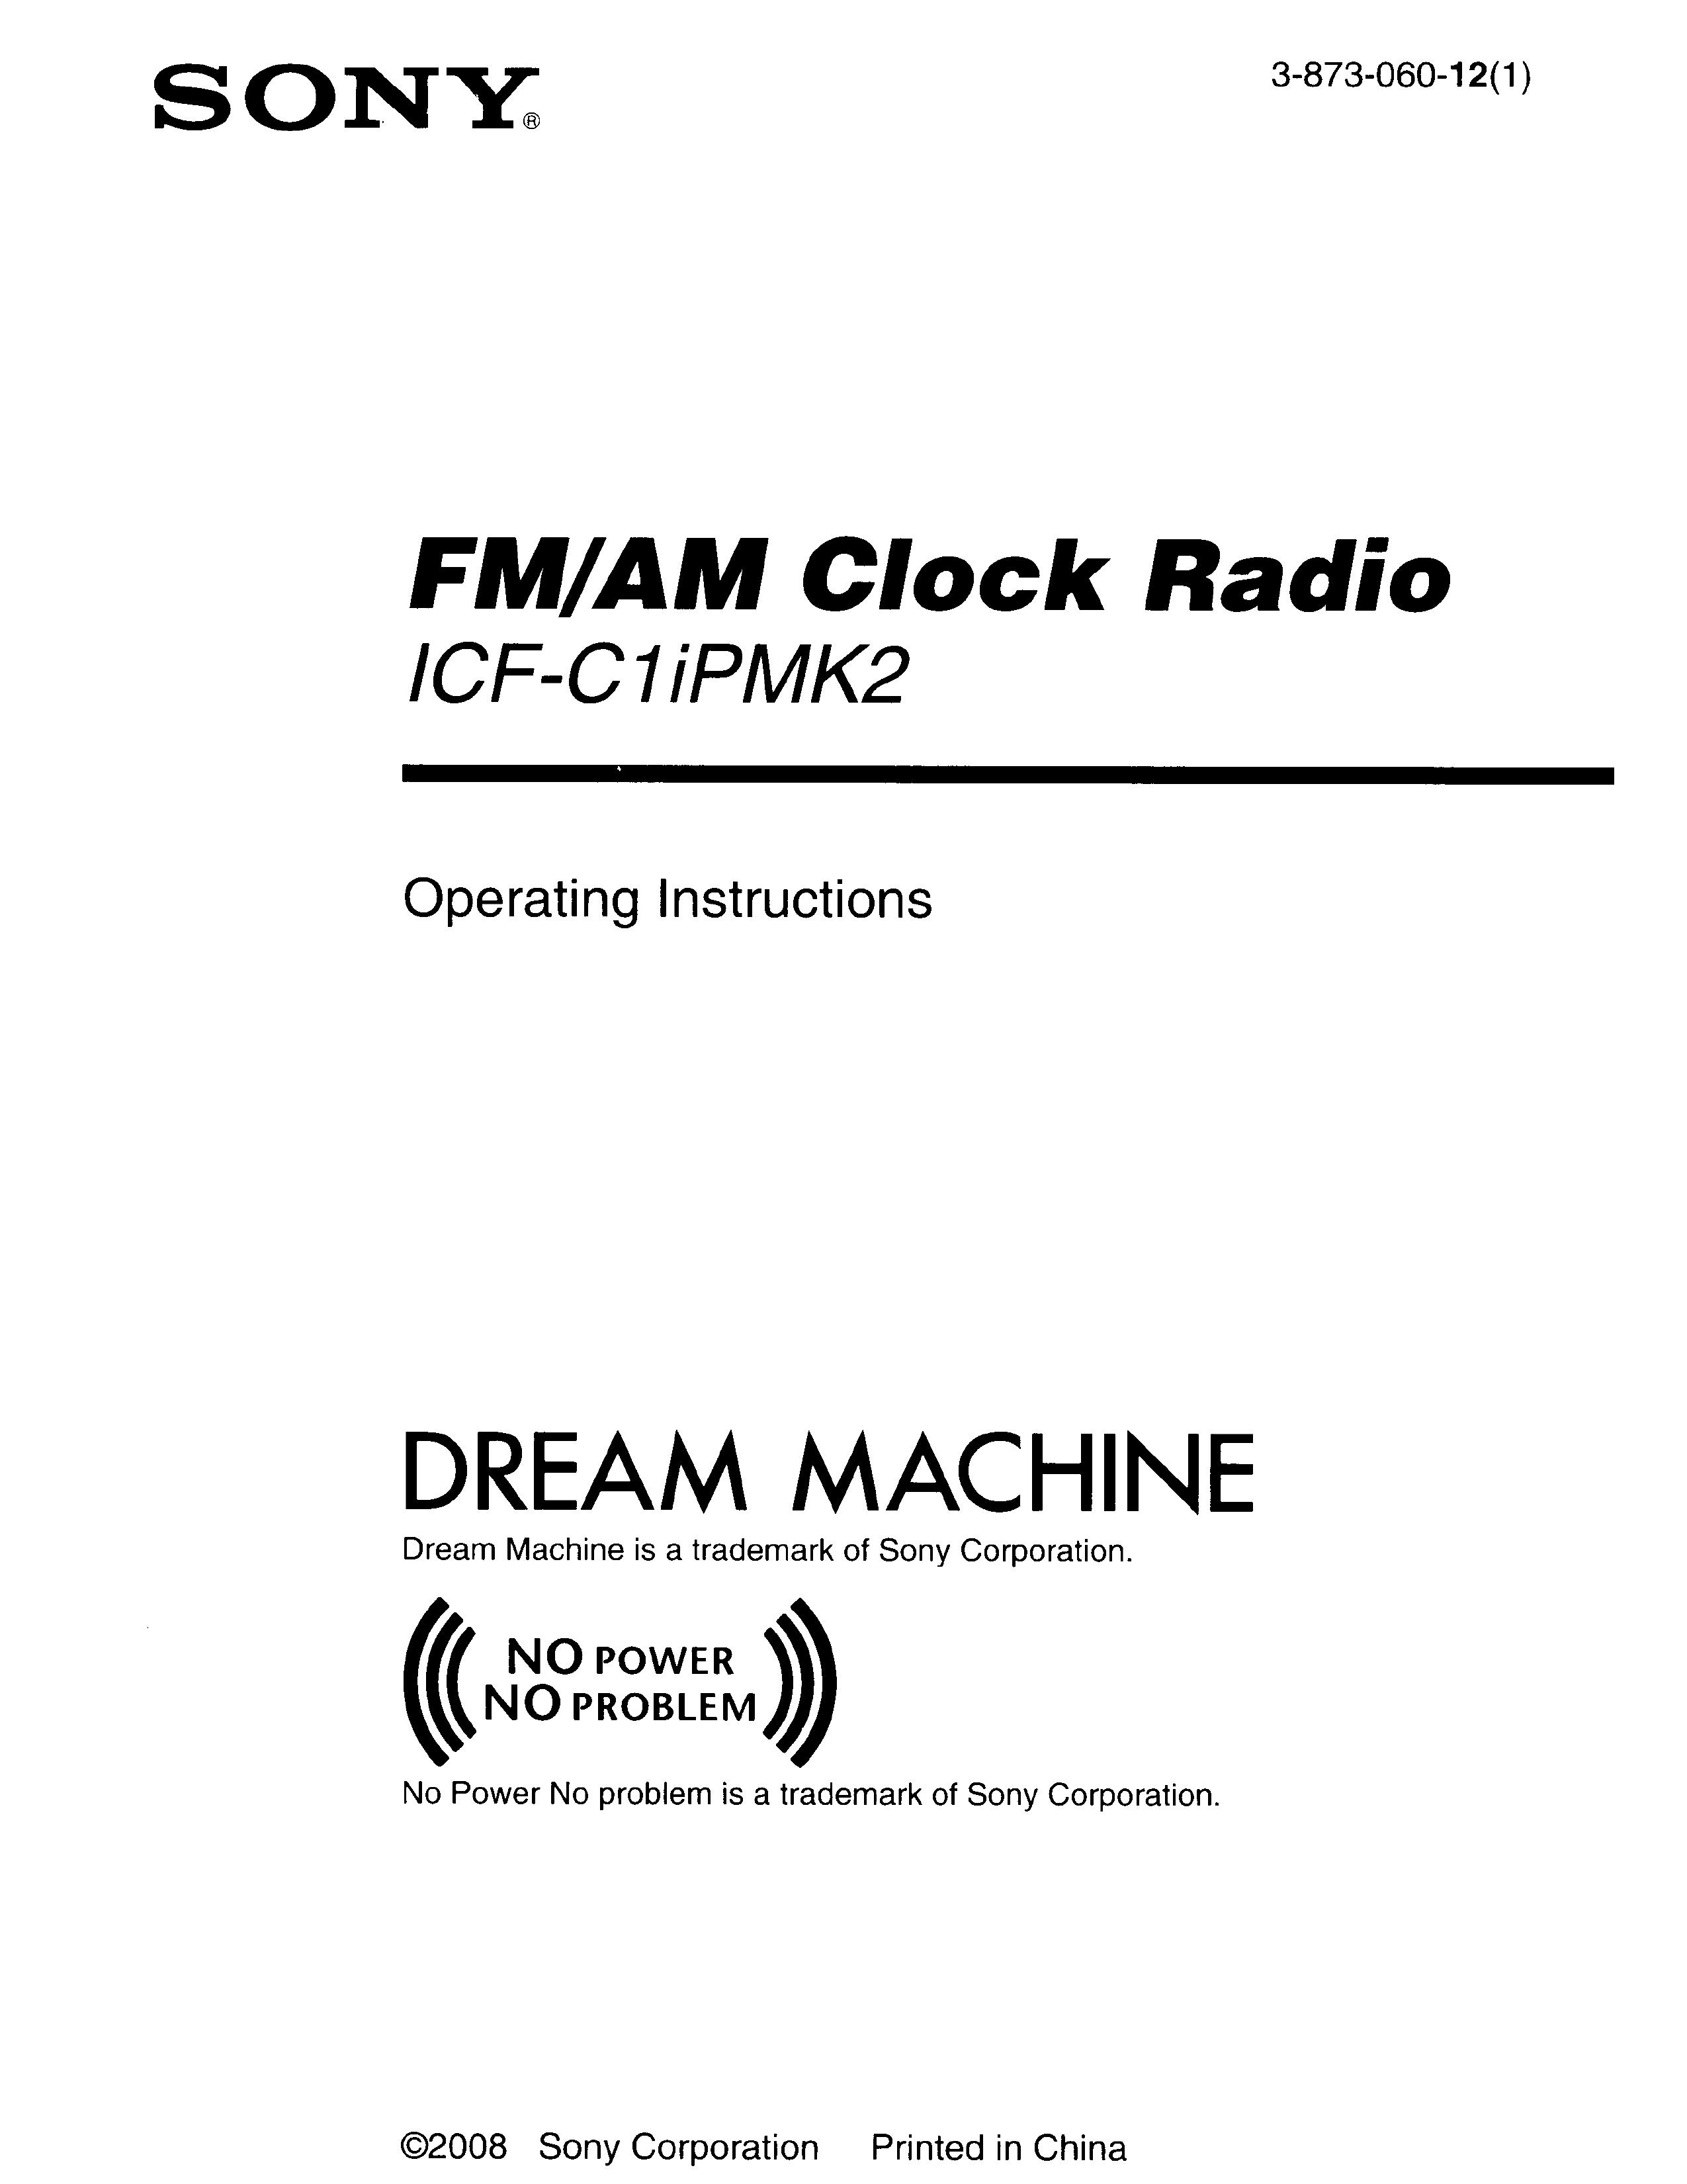 Sony ICF-C1iPMK2 Clock Radio User Manual